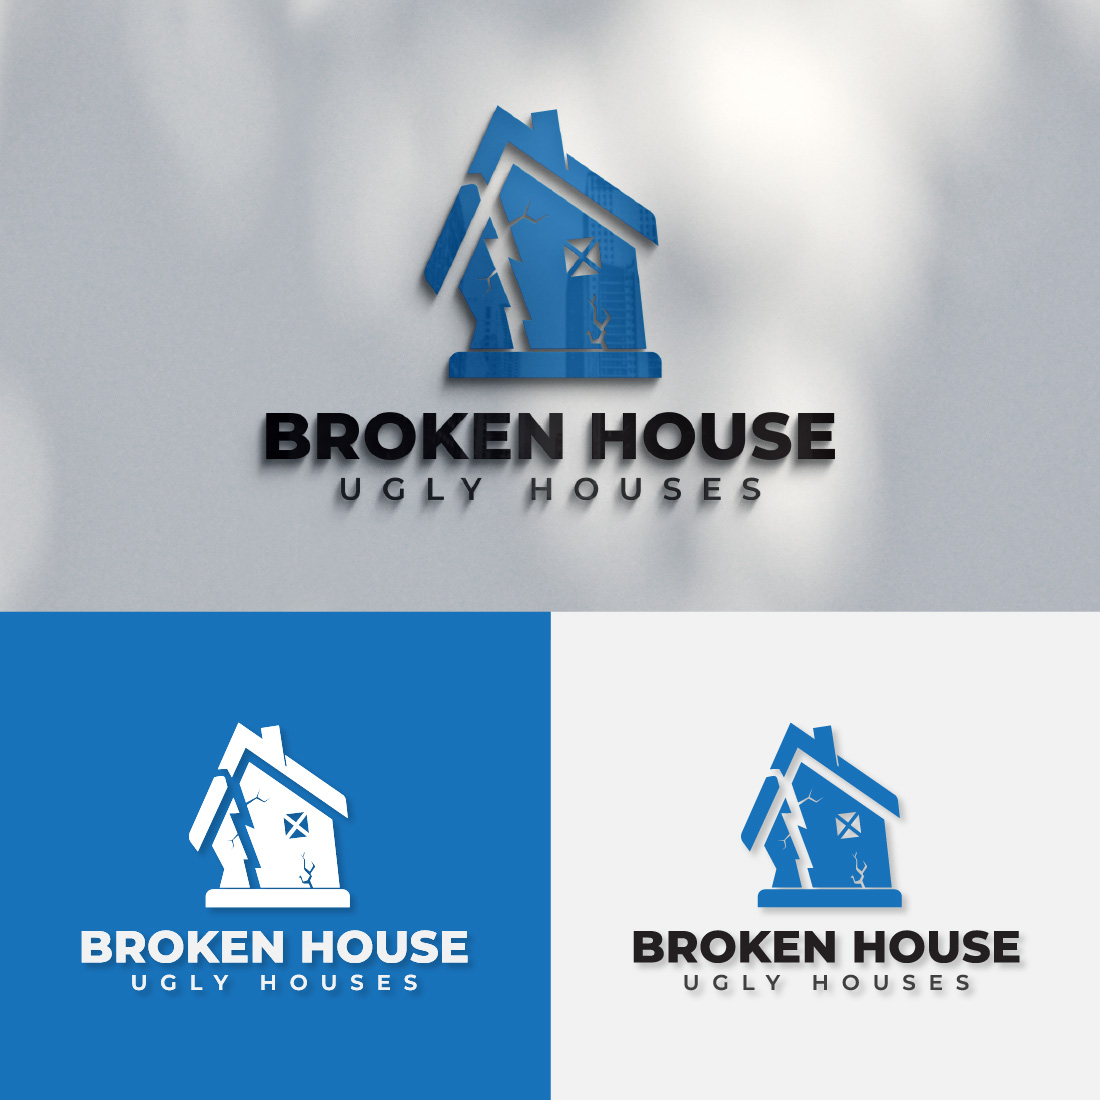 Broken Ugly Home House Logo Design Template cover image.